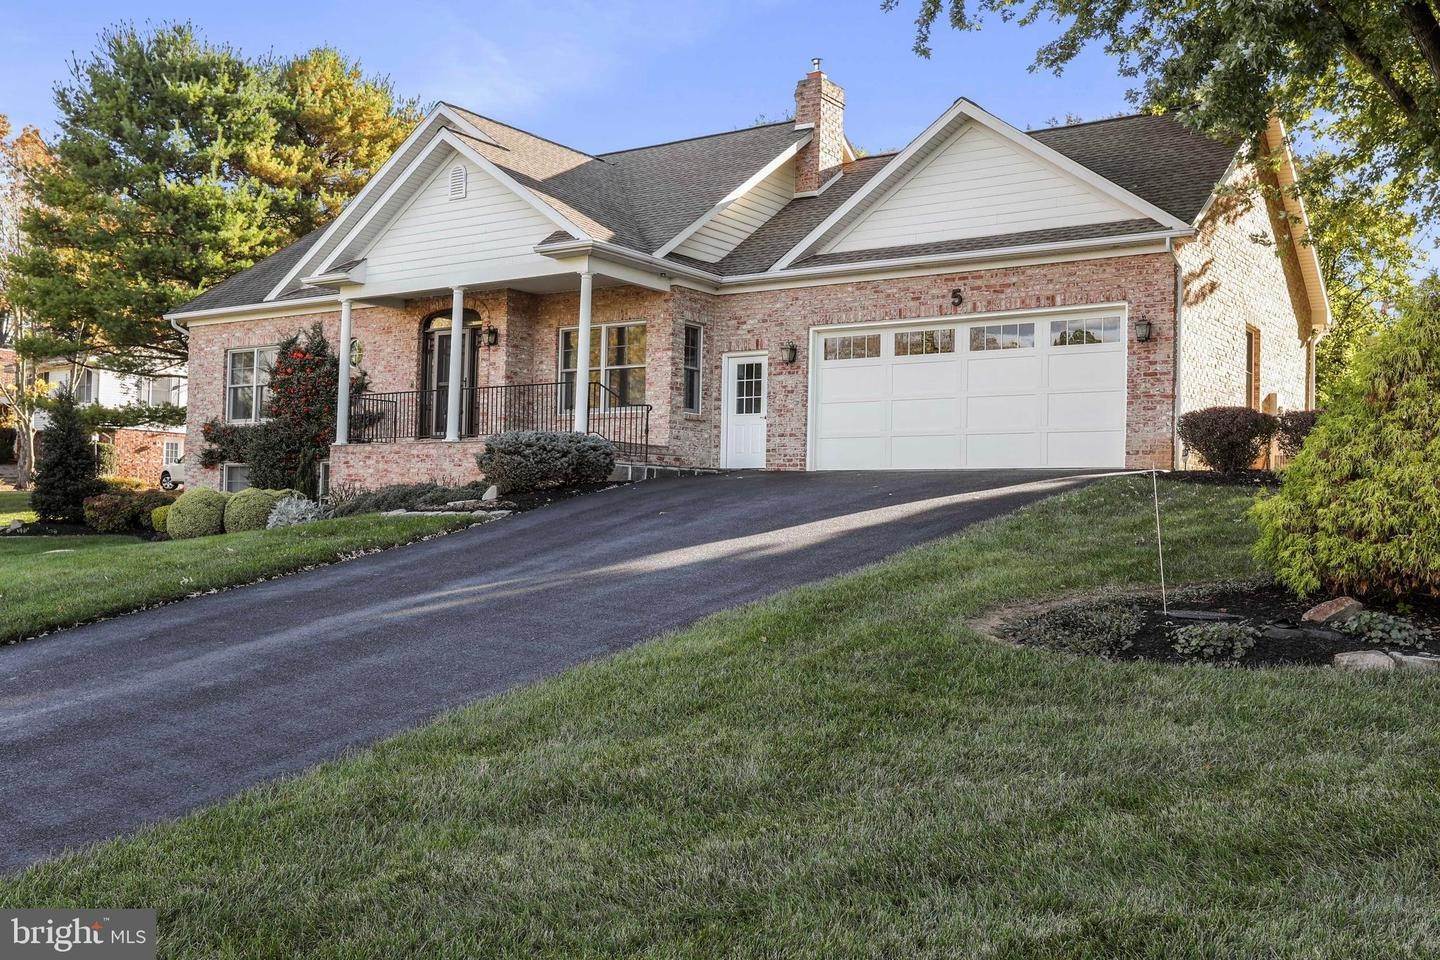 Single Family Homes για την Πώληση στο Keedysville, Μεριλαντ 21756 Ηνωμένες Πολιτείες